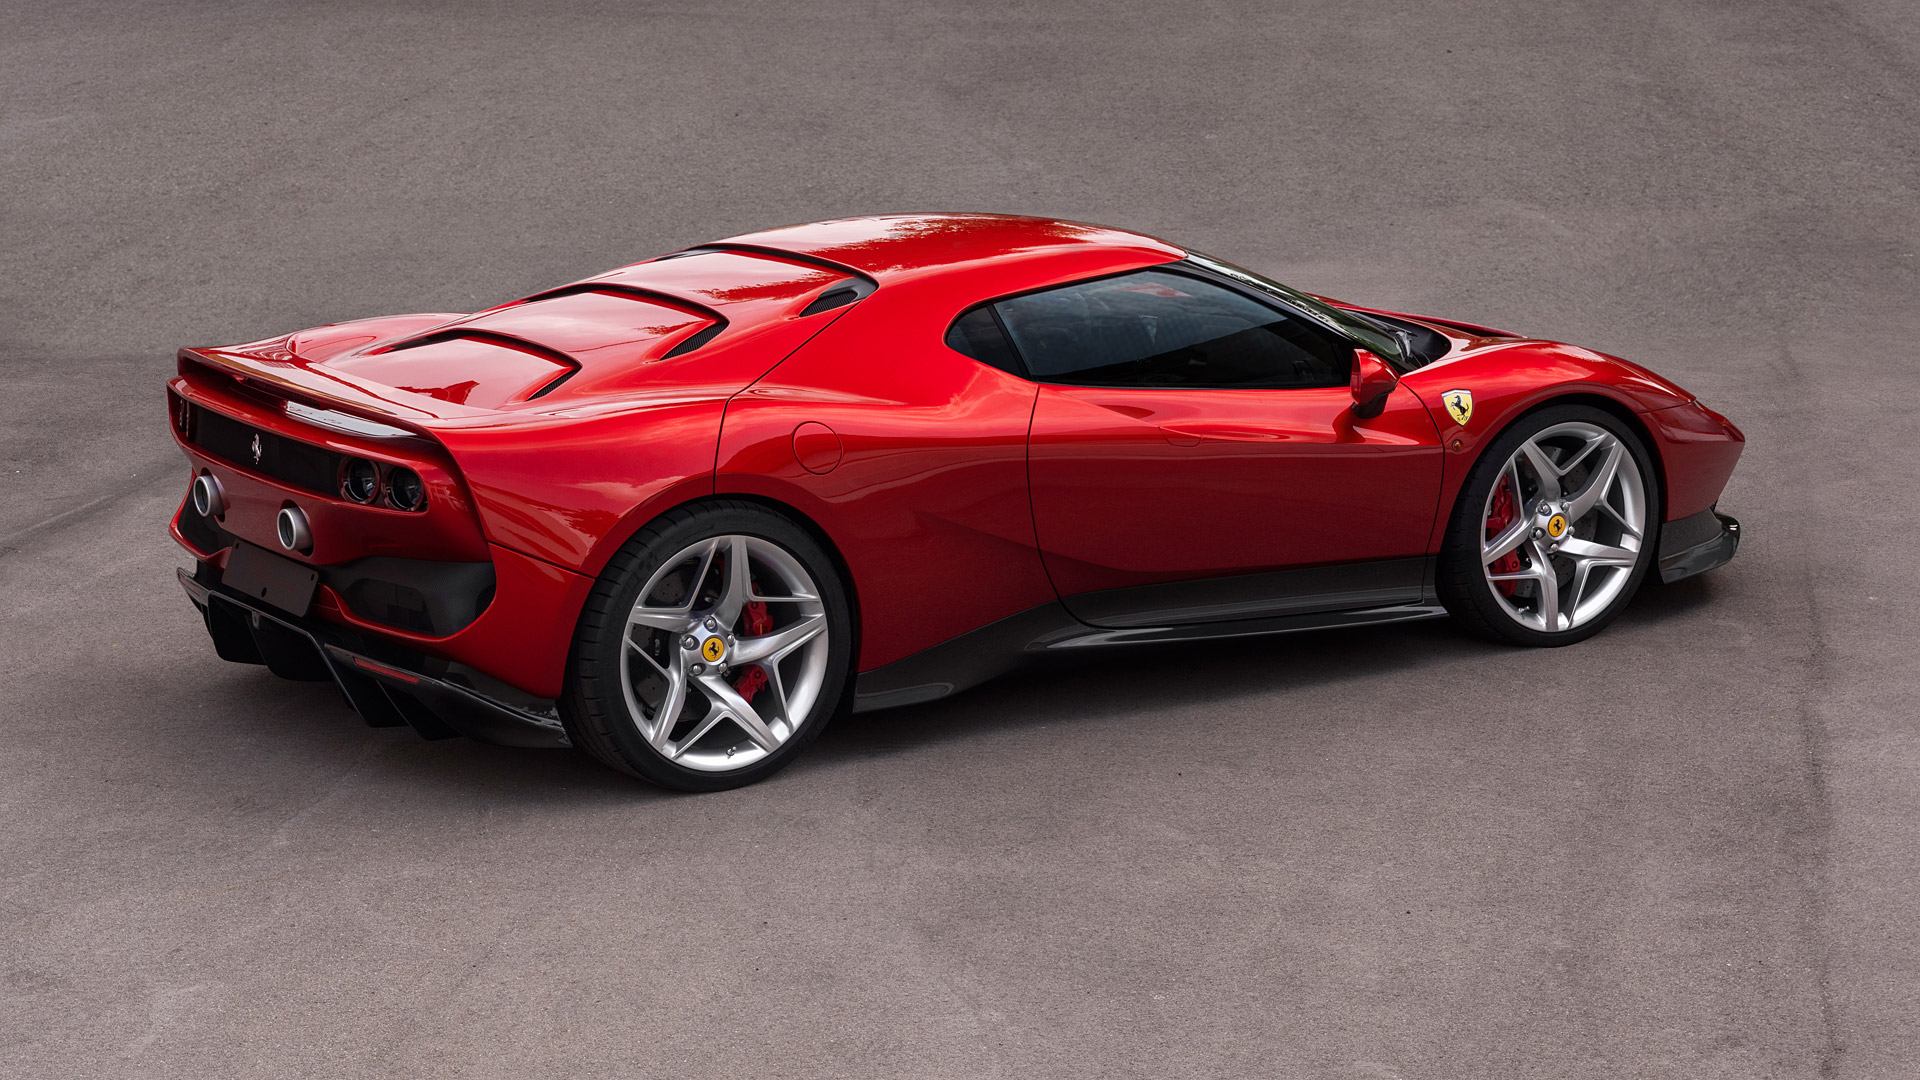 2018 Ferrari Sp38 Picture - Ferrari New Hybrid Car , HD Wallpaper & Backgrounds